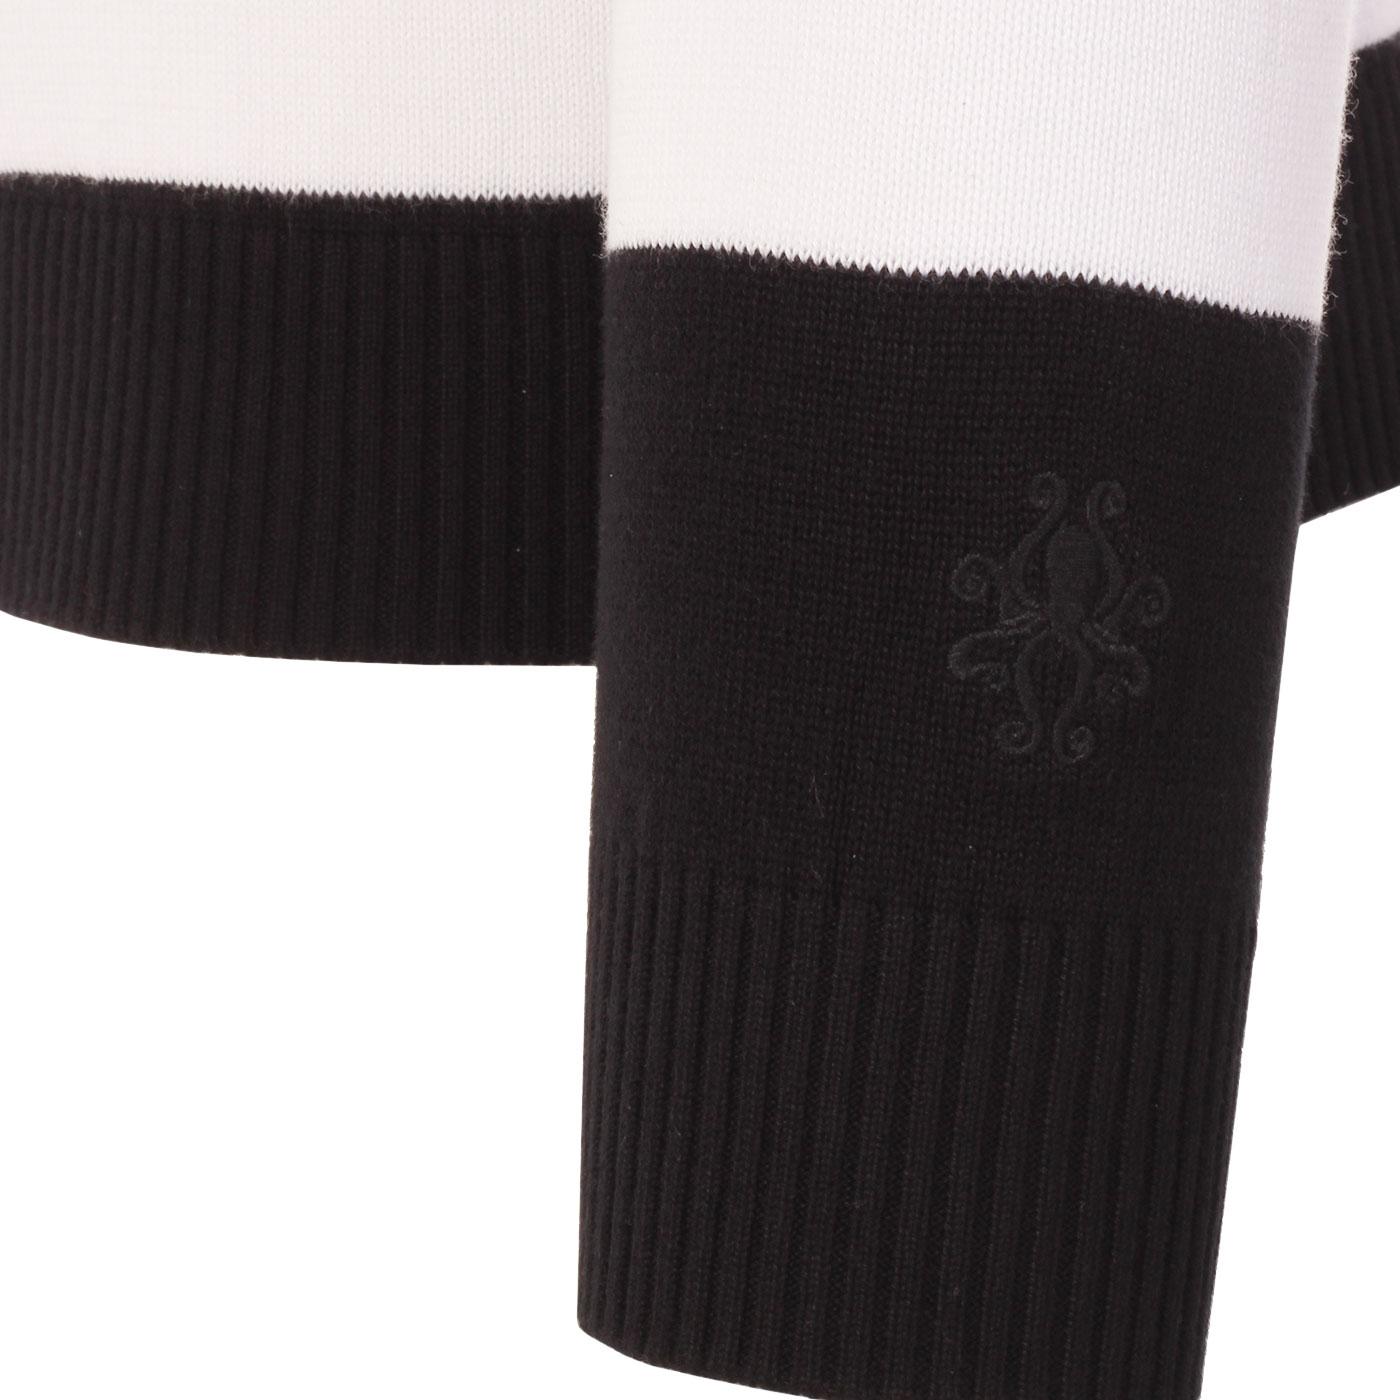 MADCAP ENGLAND Kingsnake Mod Stripe Knit Tee in Black